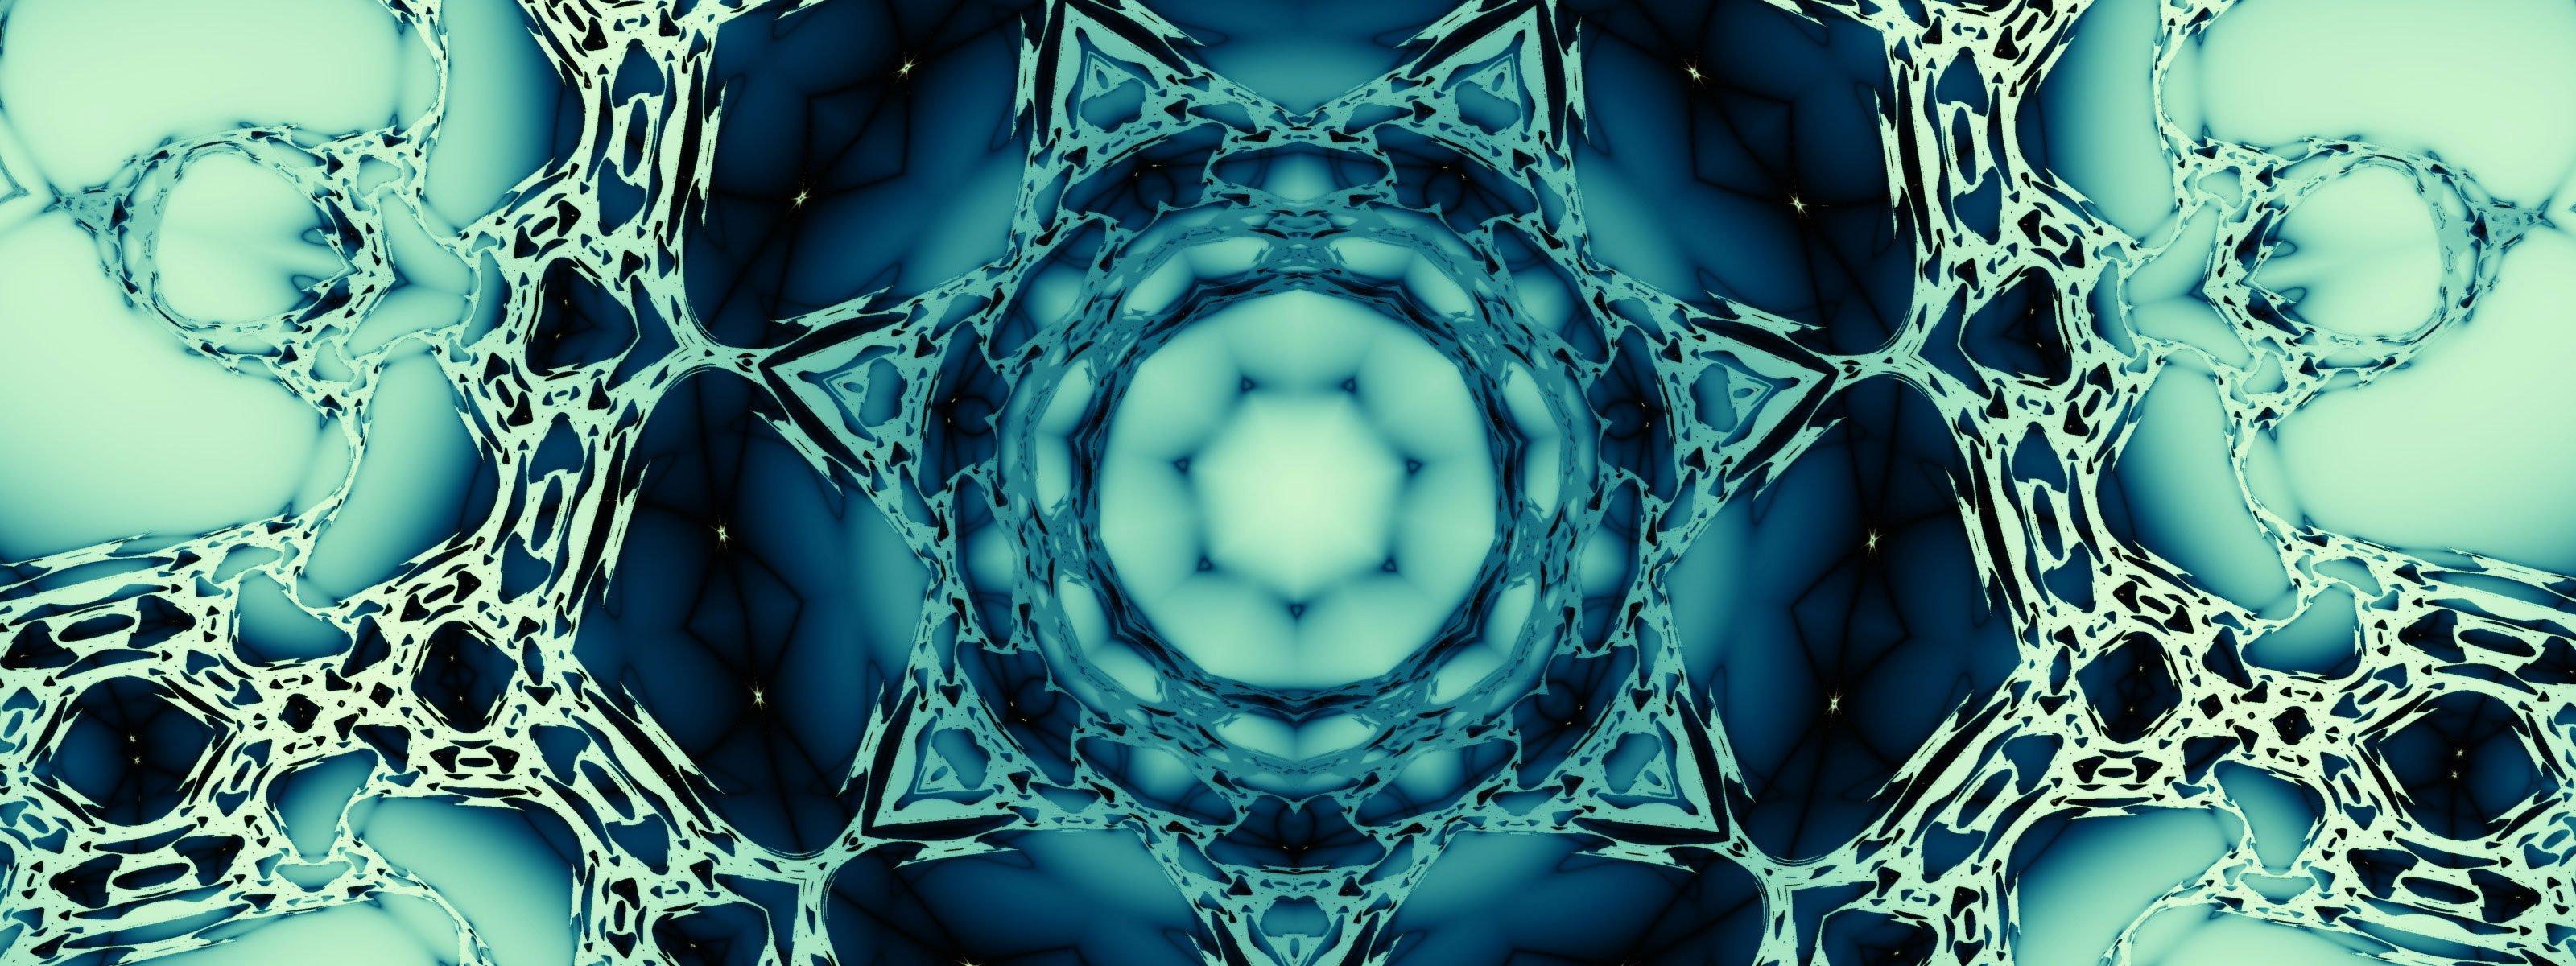 Abstract Digital Art Kaleidoscope Fractal so focused Wallpaper